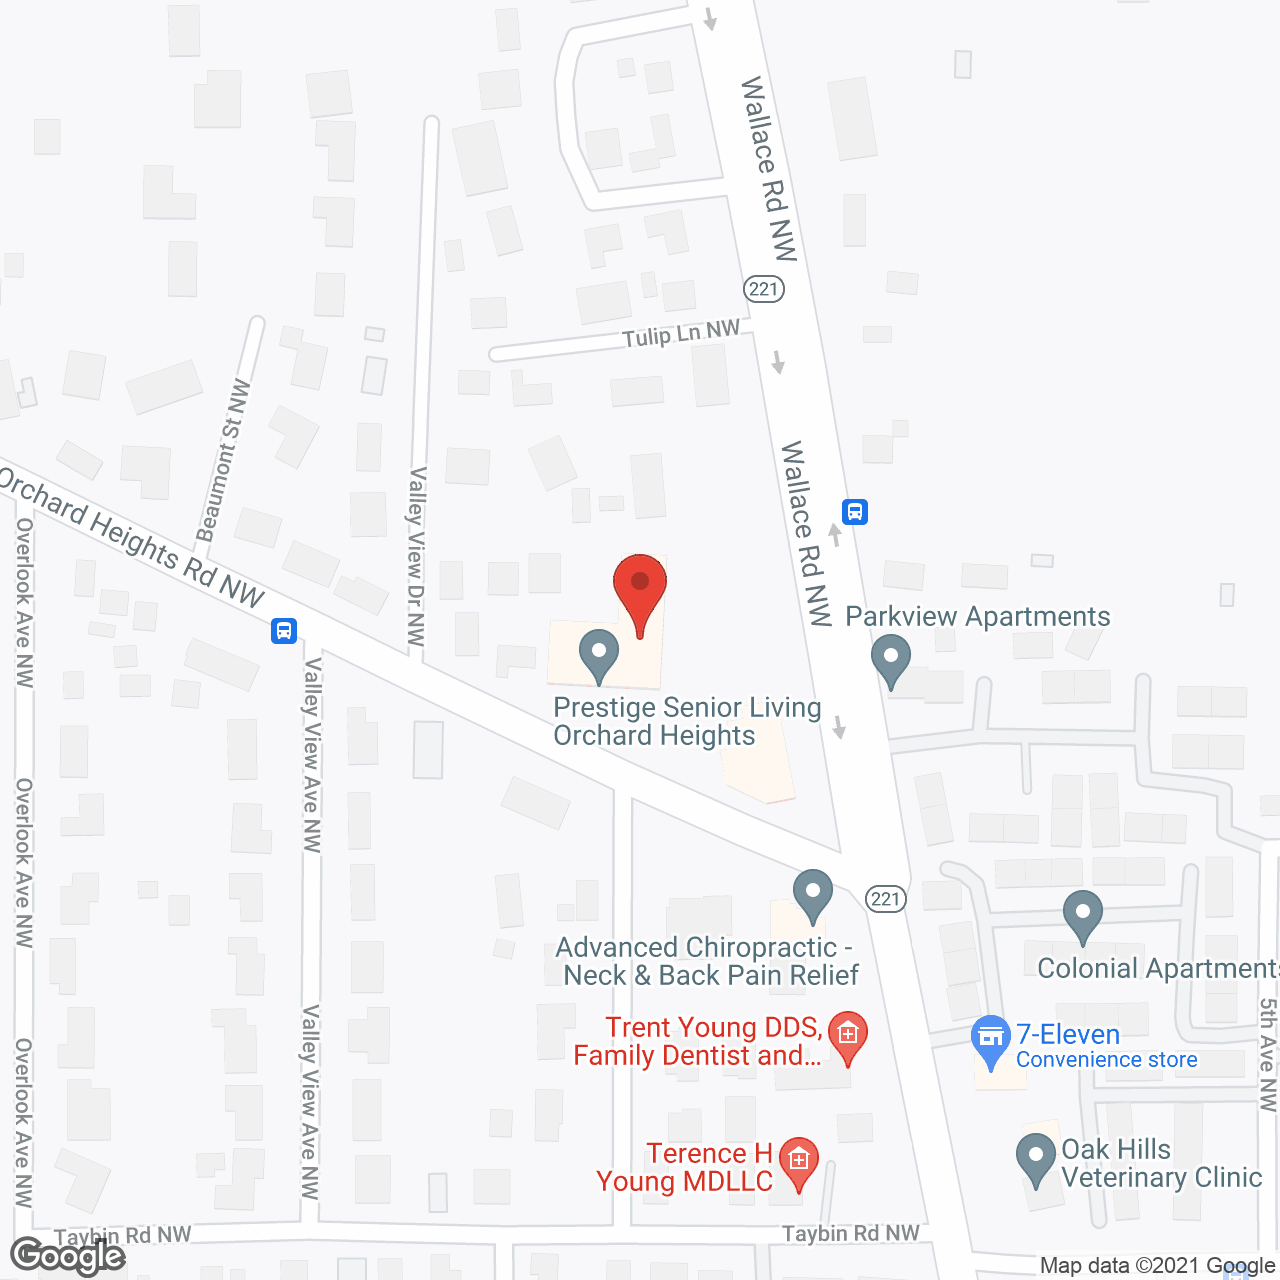 Prestige Senior Living Orchard Heights in google map